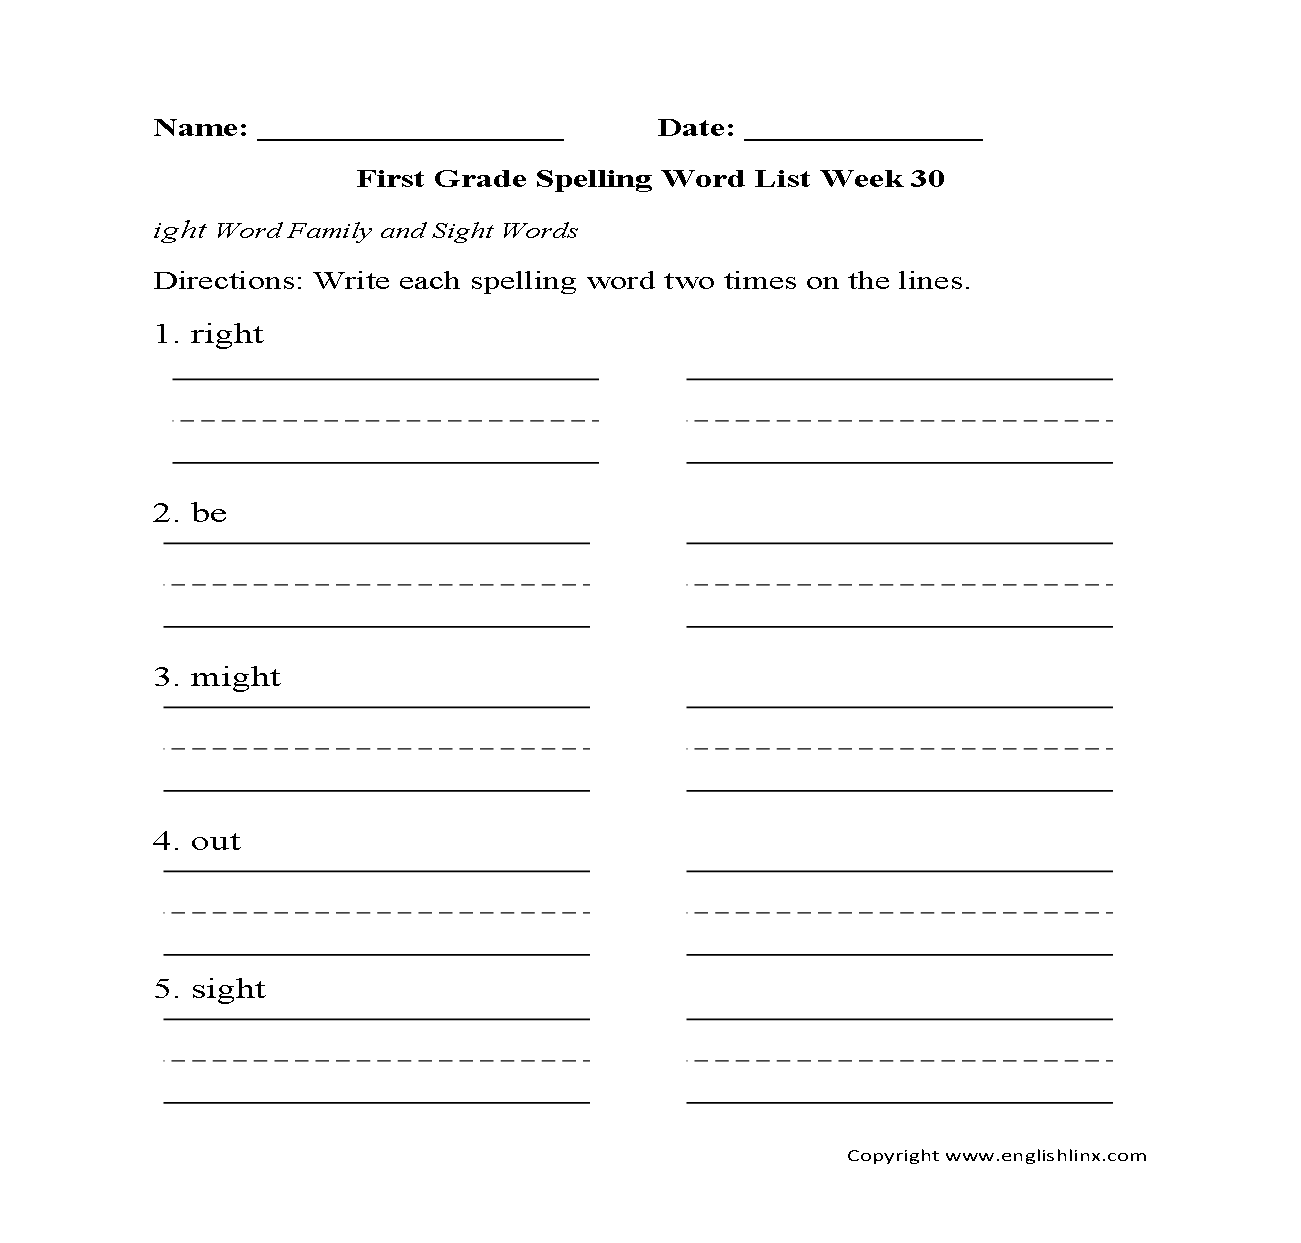 Week 30 ight family First Grade Spelling Words Worksheet